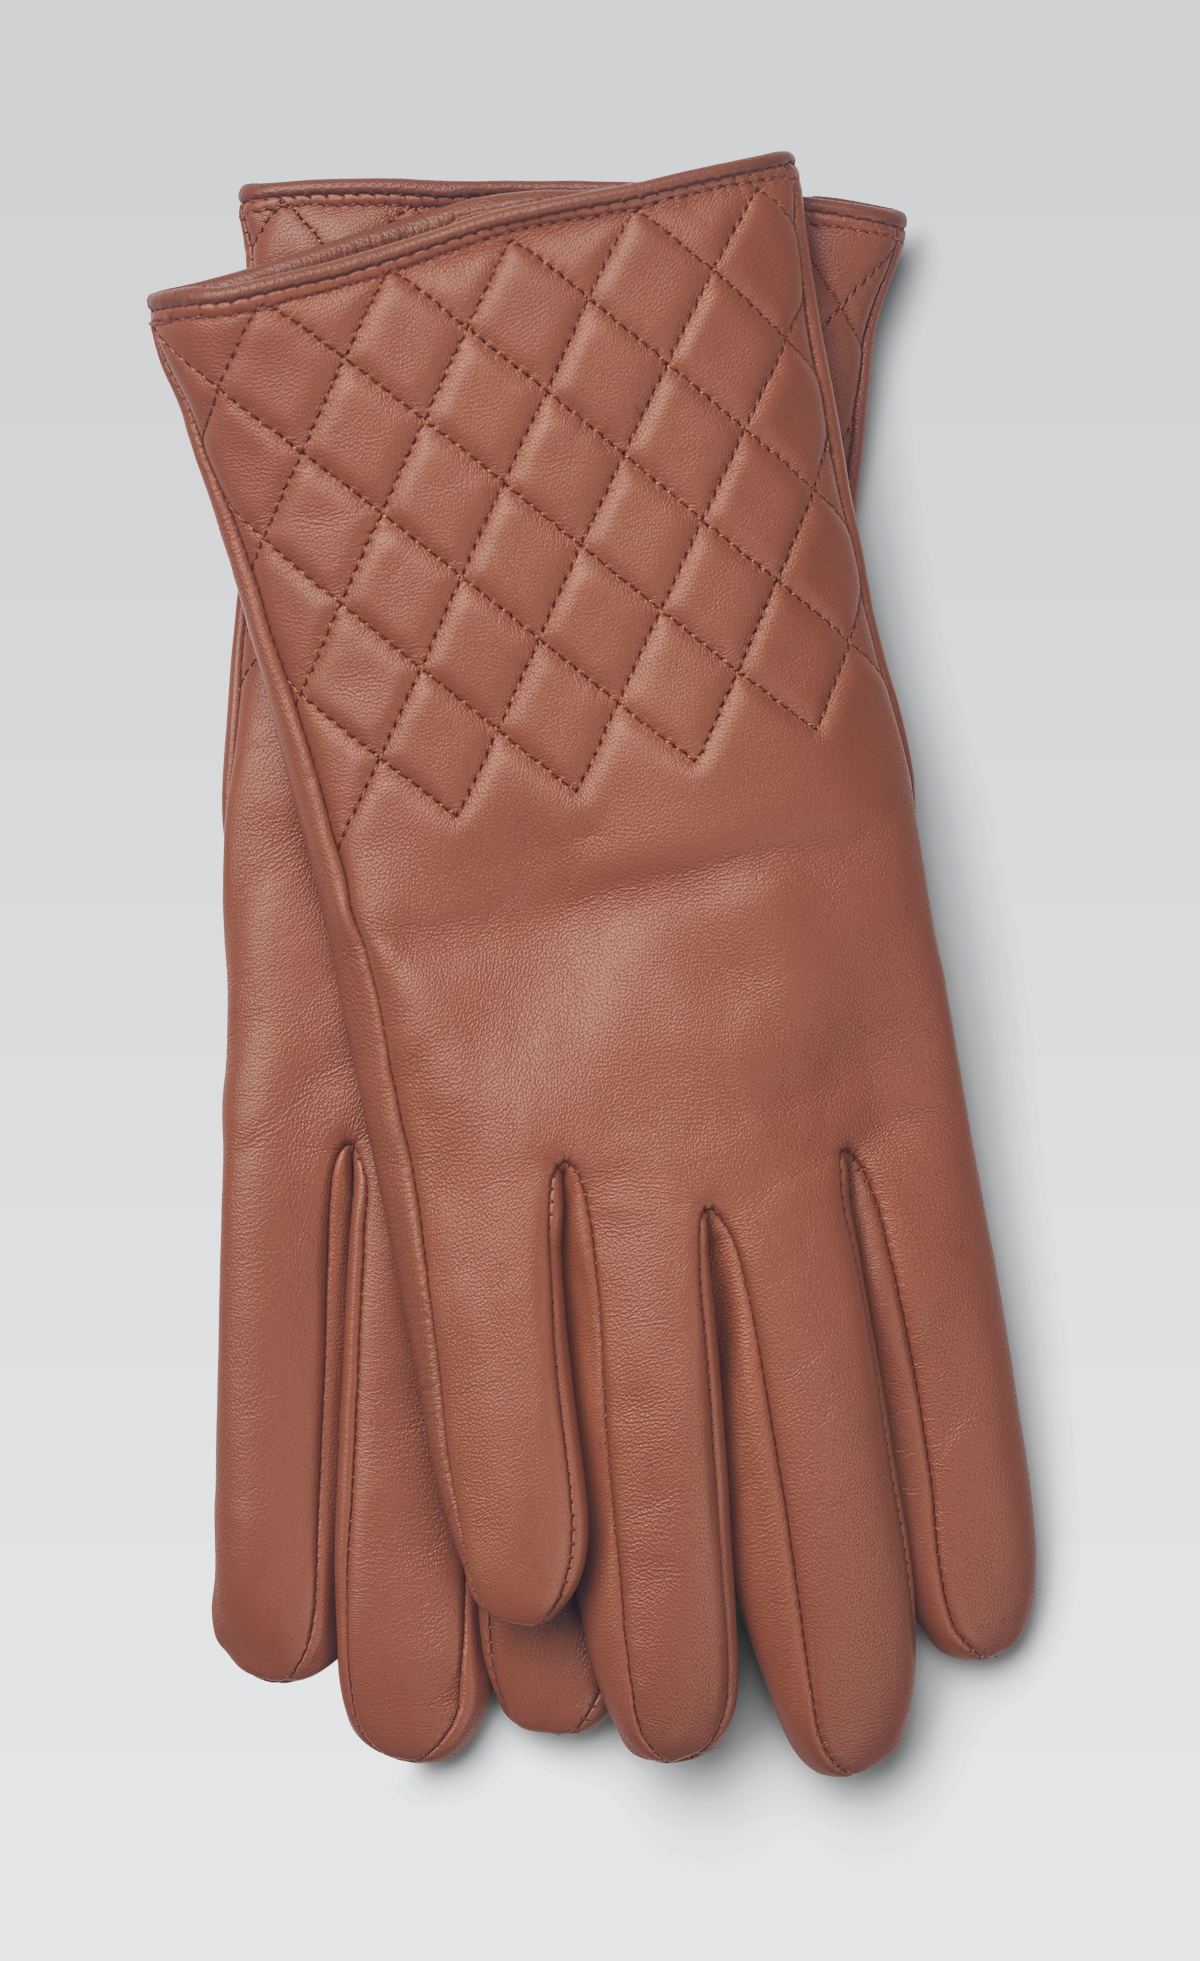 Nielsens hansker i brun læder med detaljer